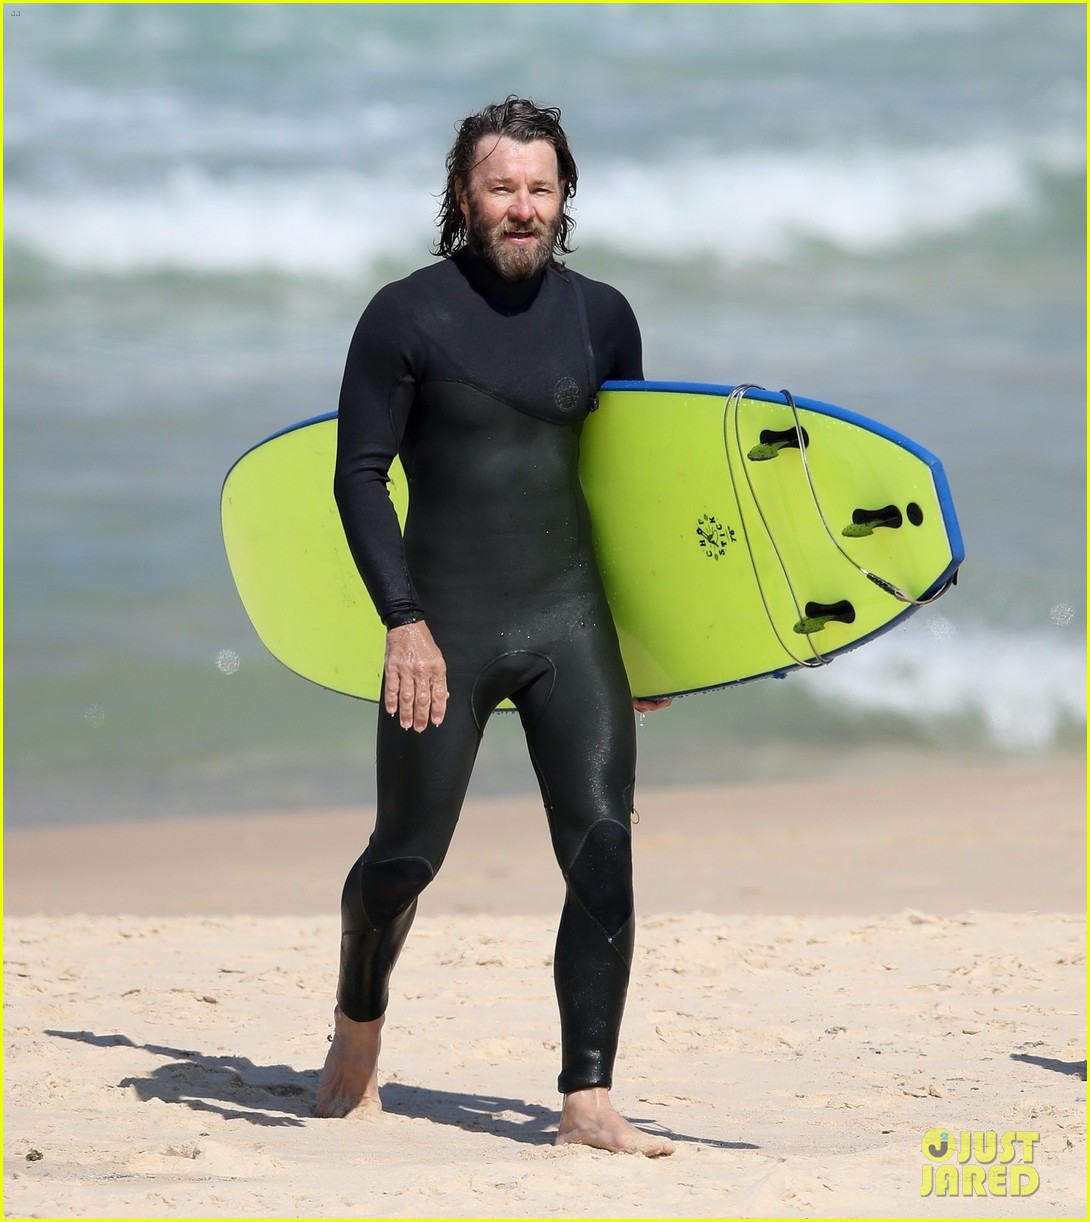 joel-edgerton-flaunts-his-abs-after-surfing-in-australia-26.jpg